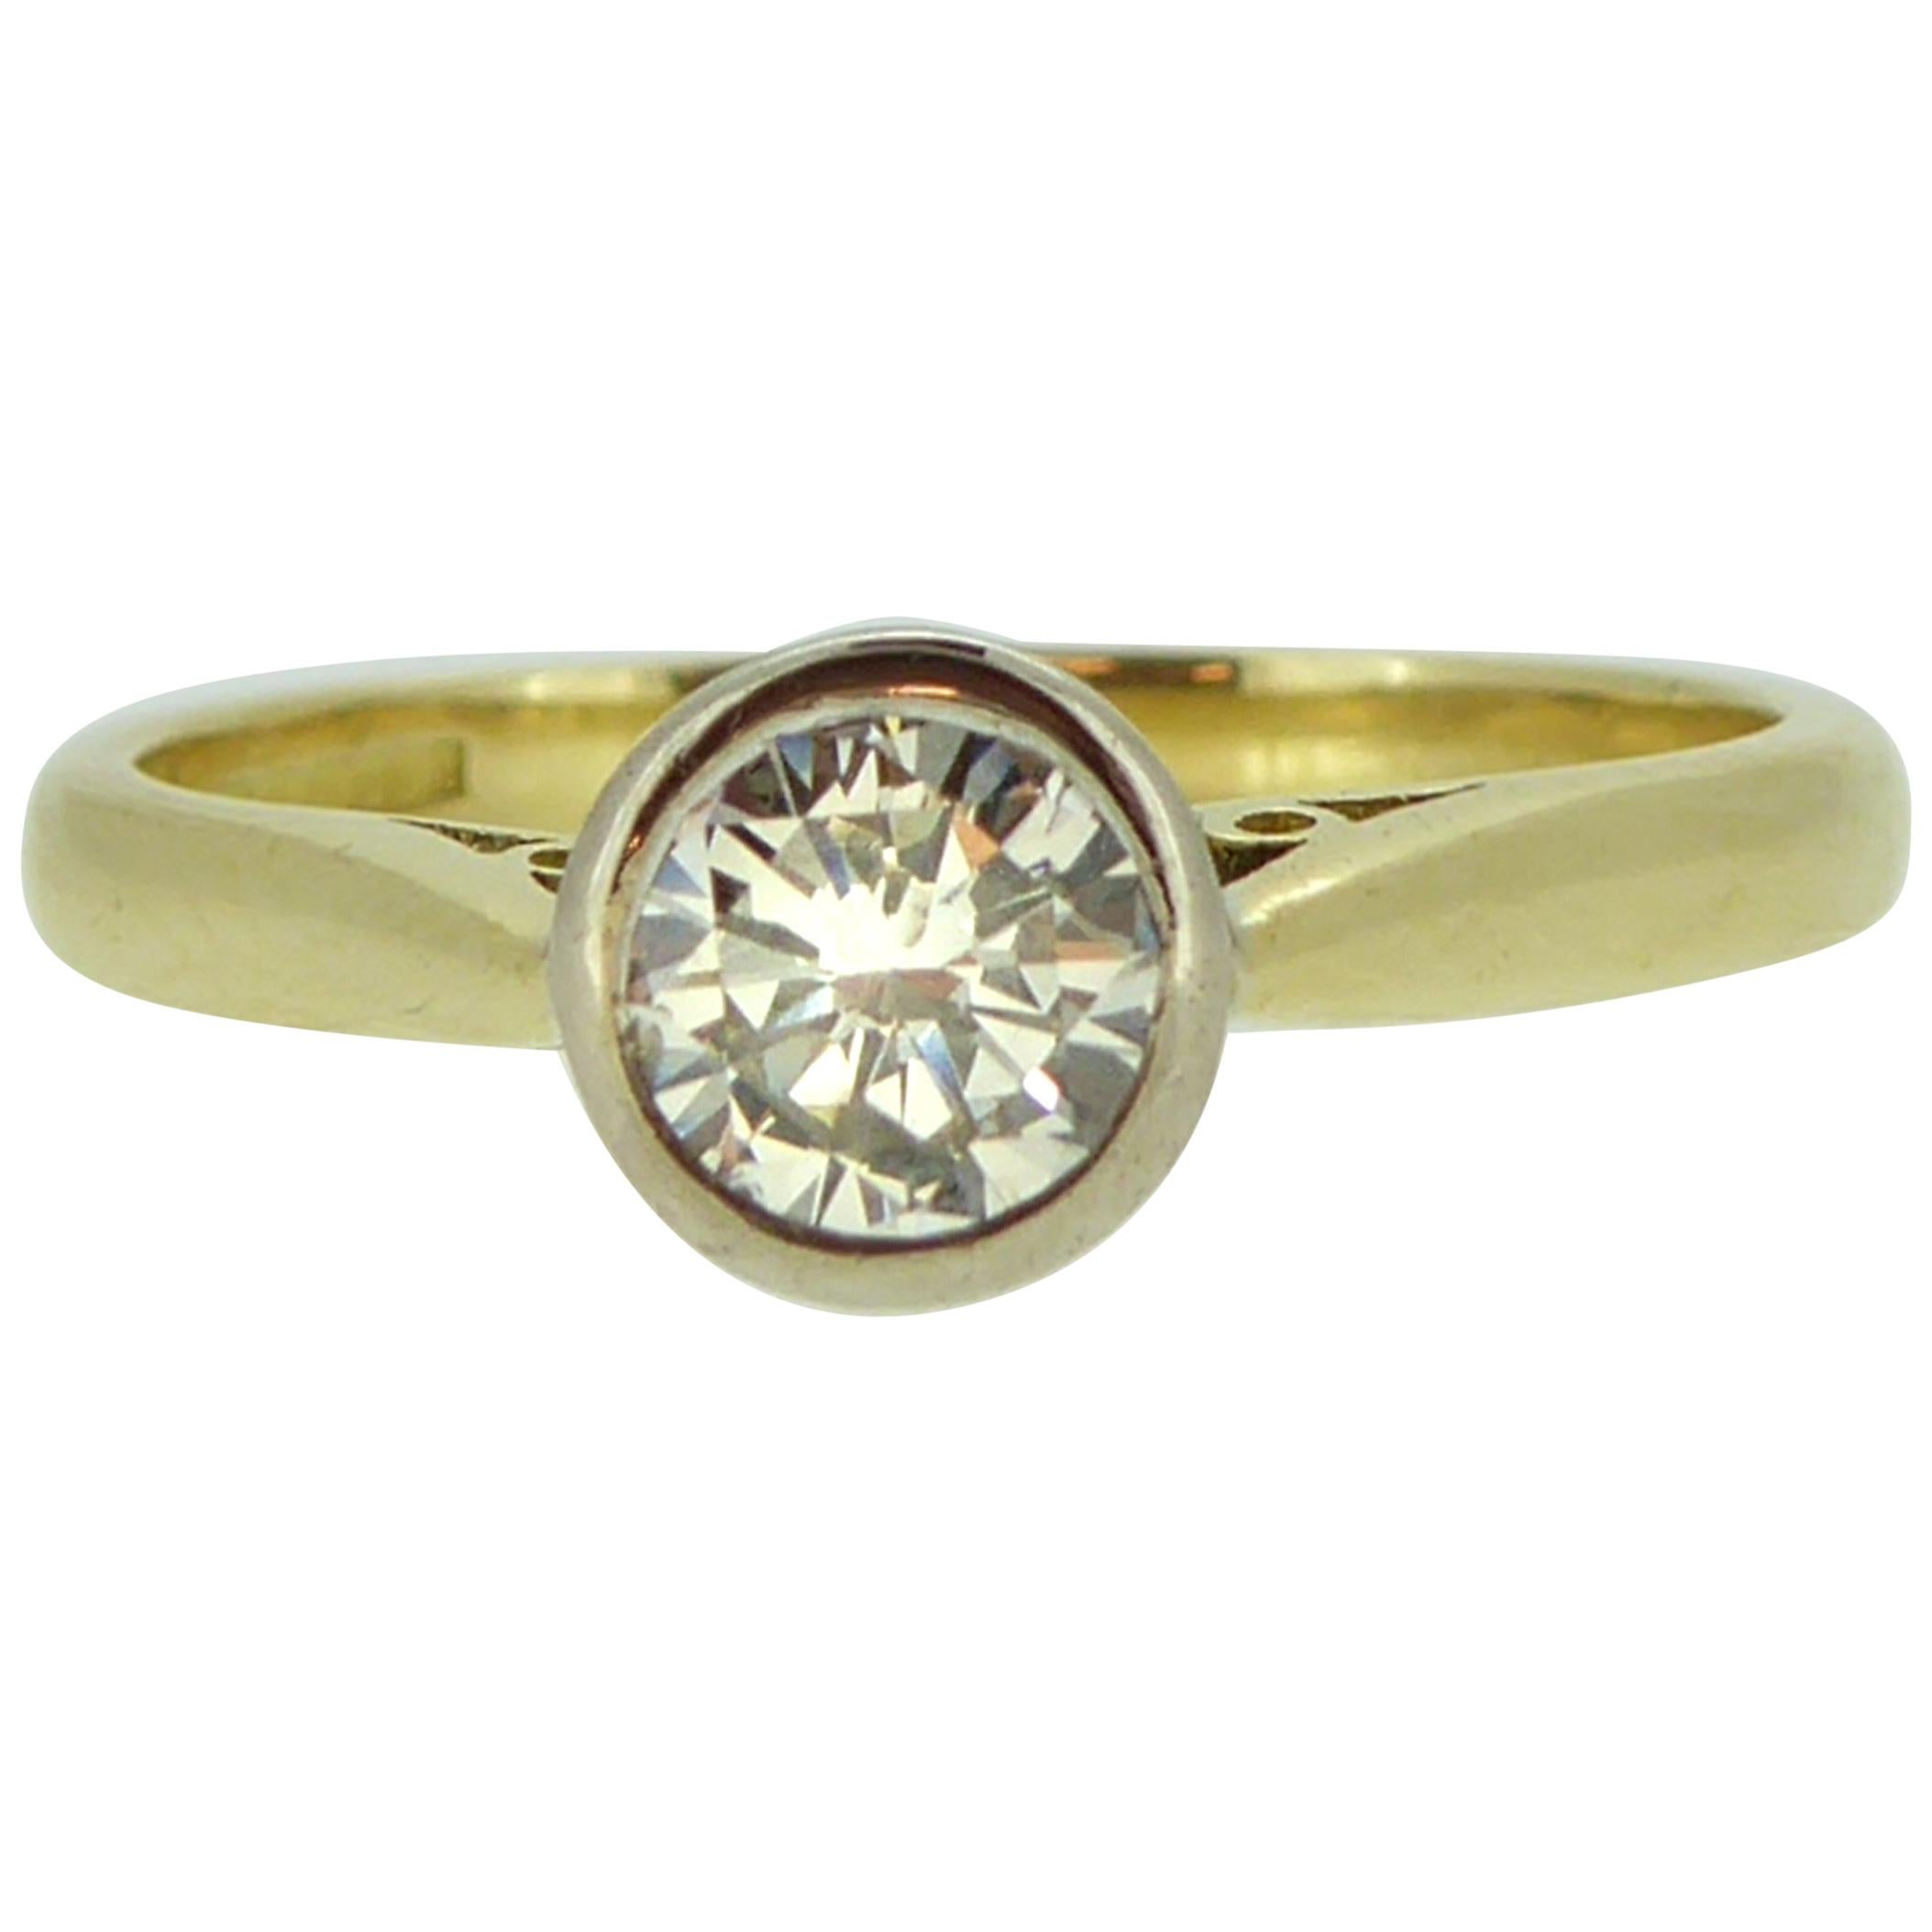 Modern Art Deco Style 0.50 Carat Diamond Solitaire Engagement Ring